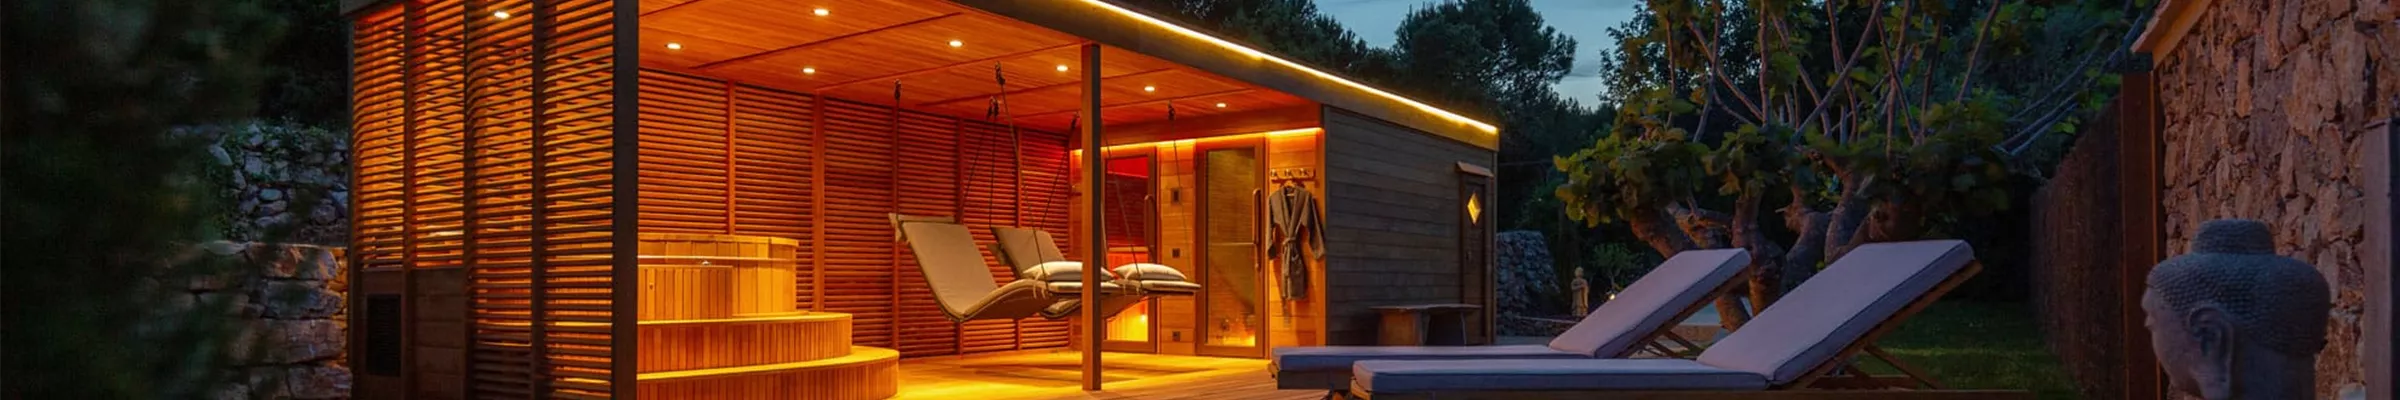 sauna-terrasse.jpg